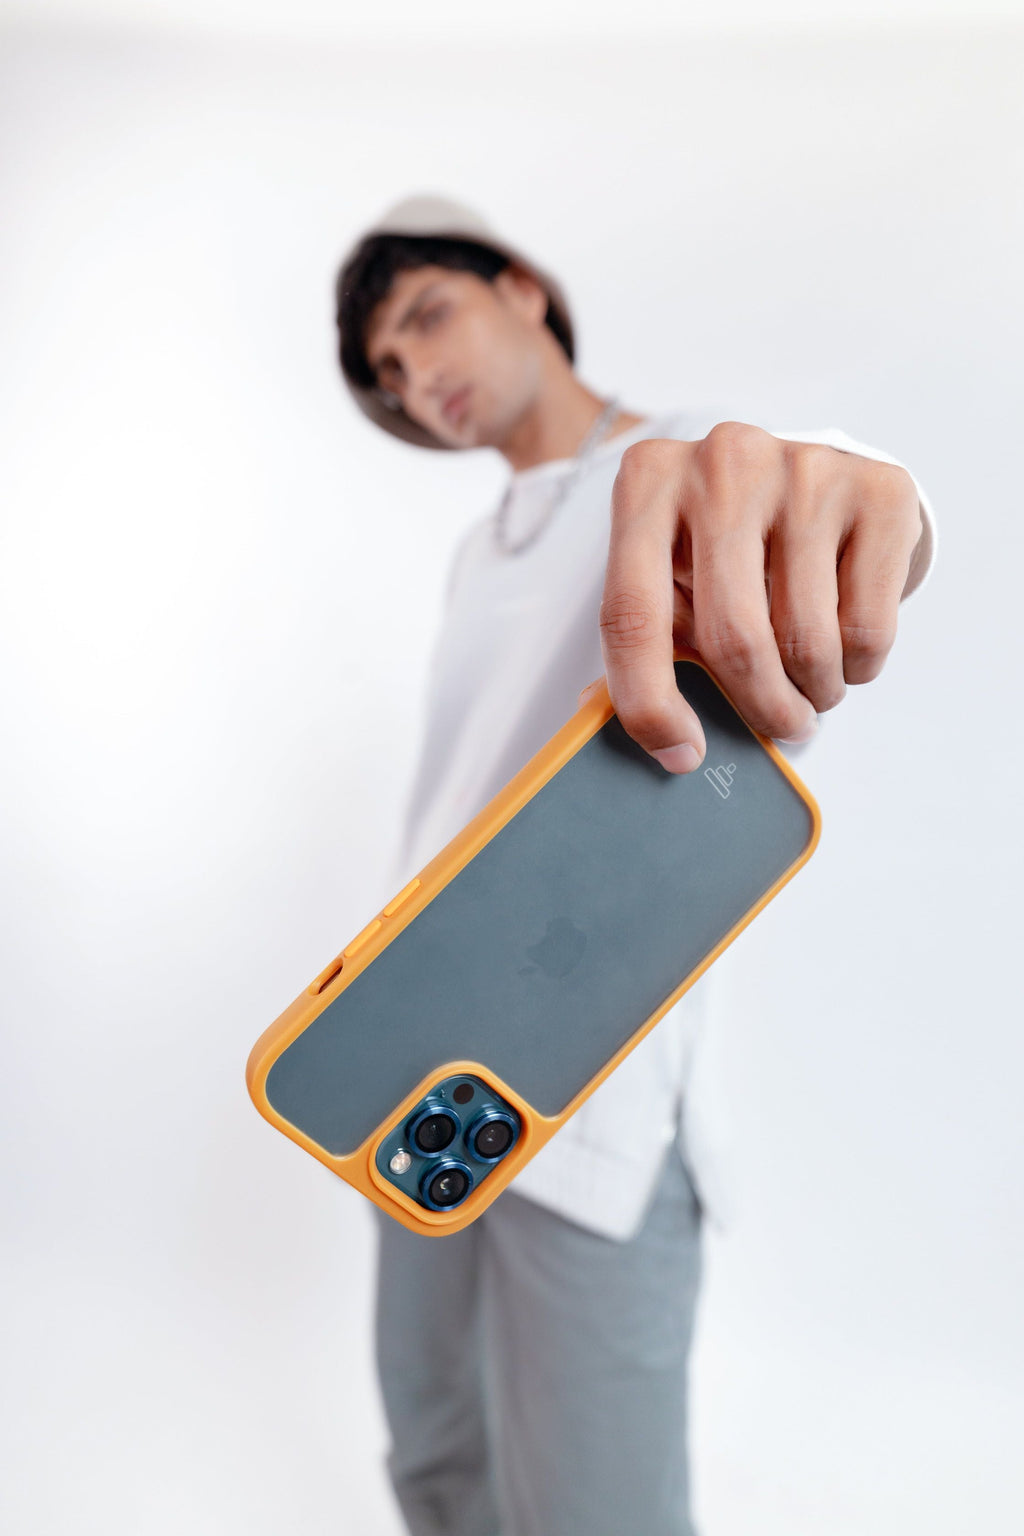 mustard-iphone-13